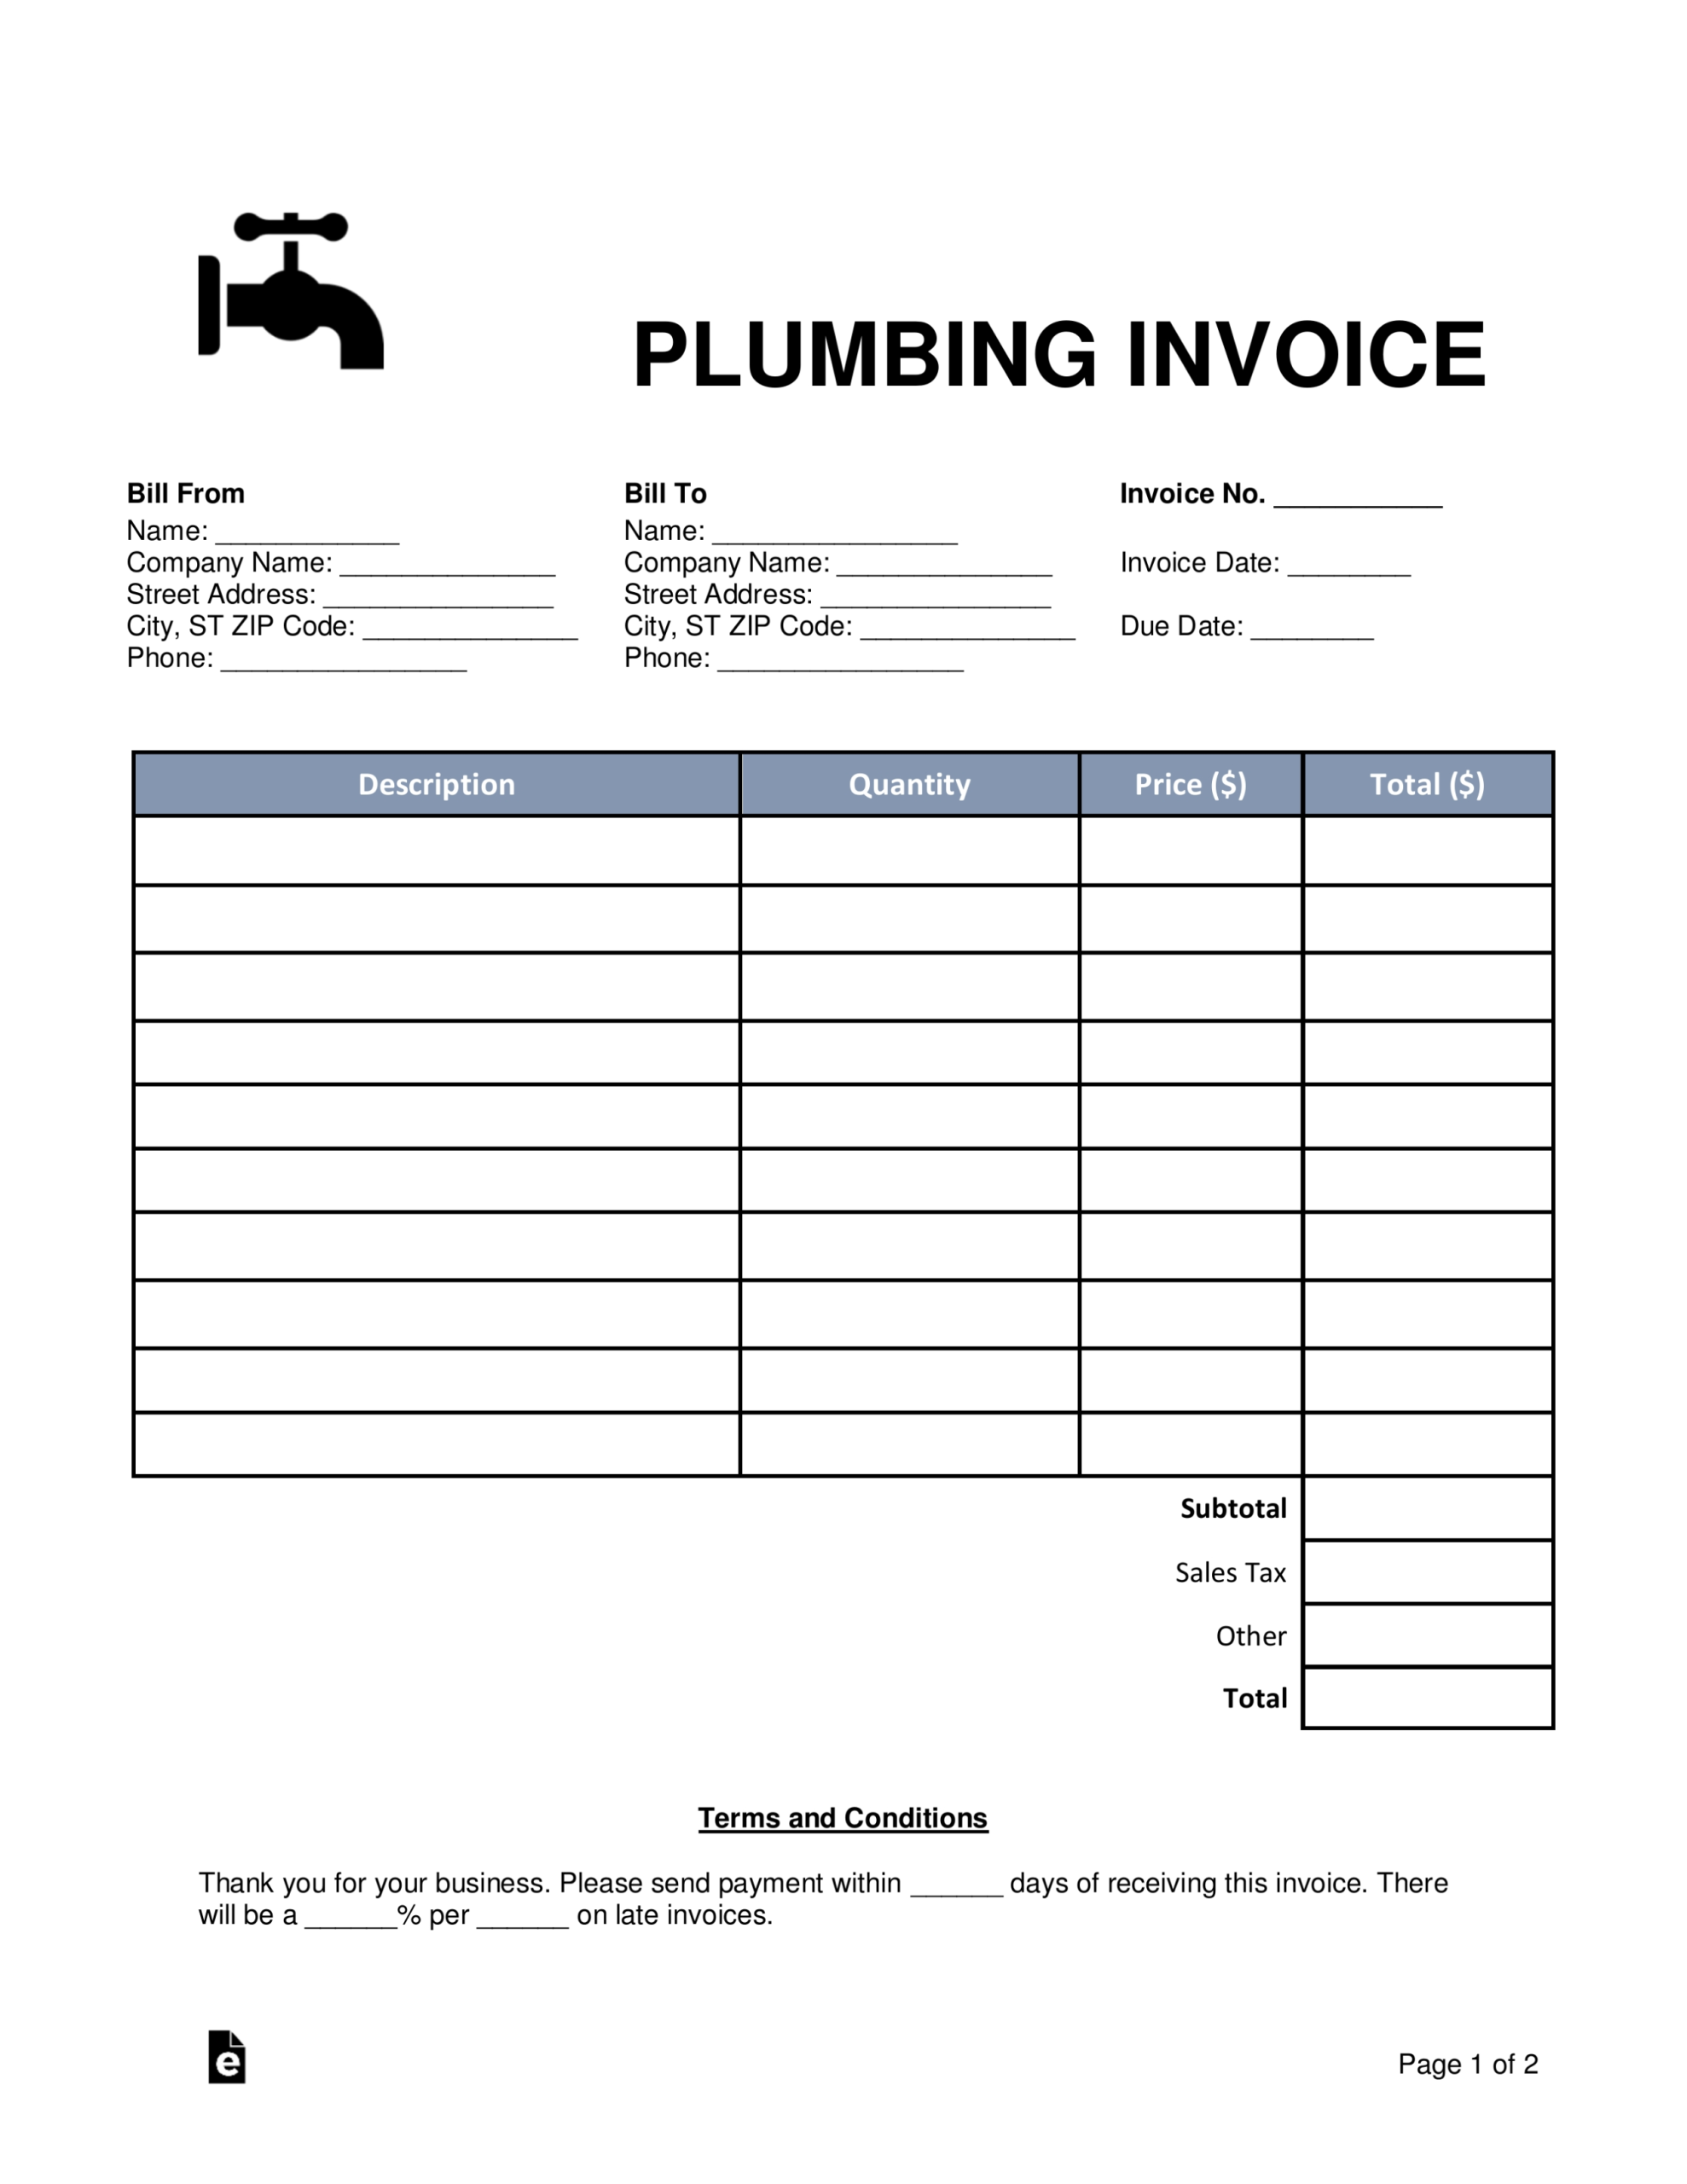 Free Plumbing Invoice Template – Word | Pdf – Eforms In Plumbing Proposal Template